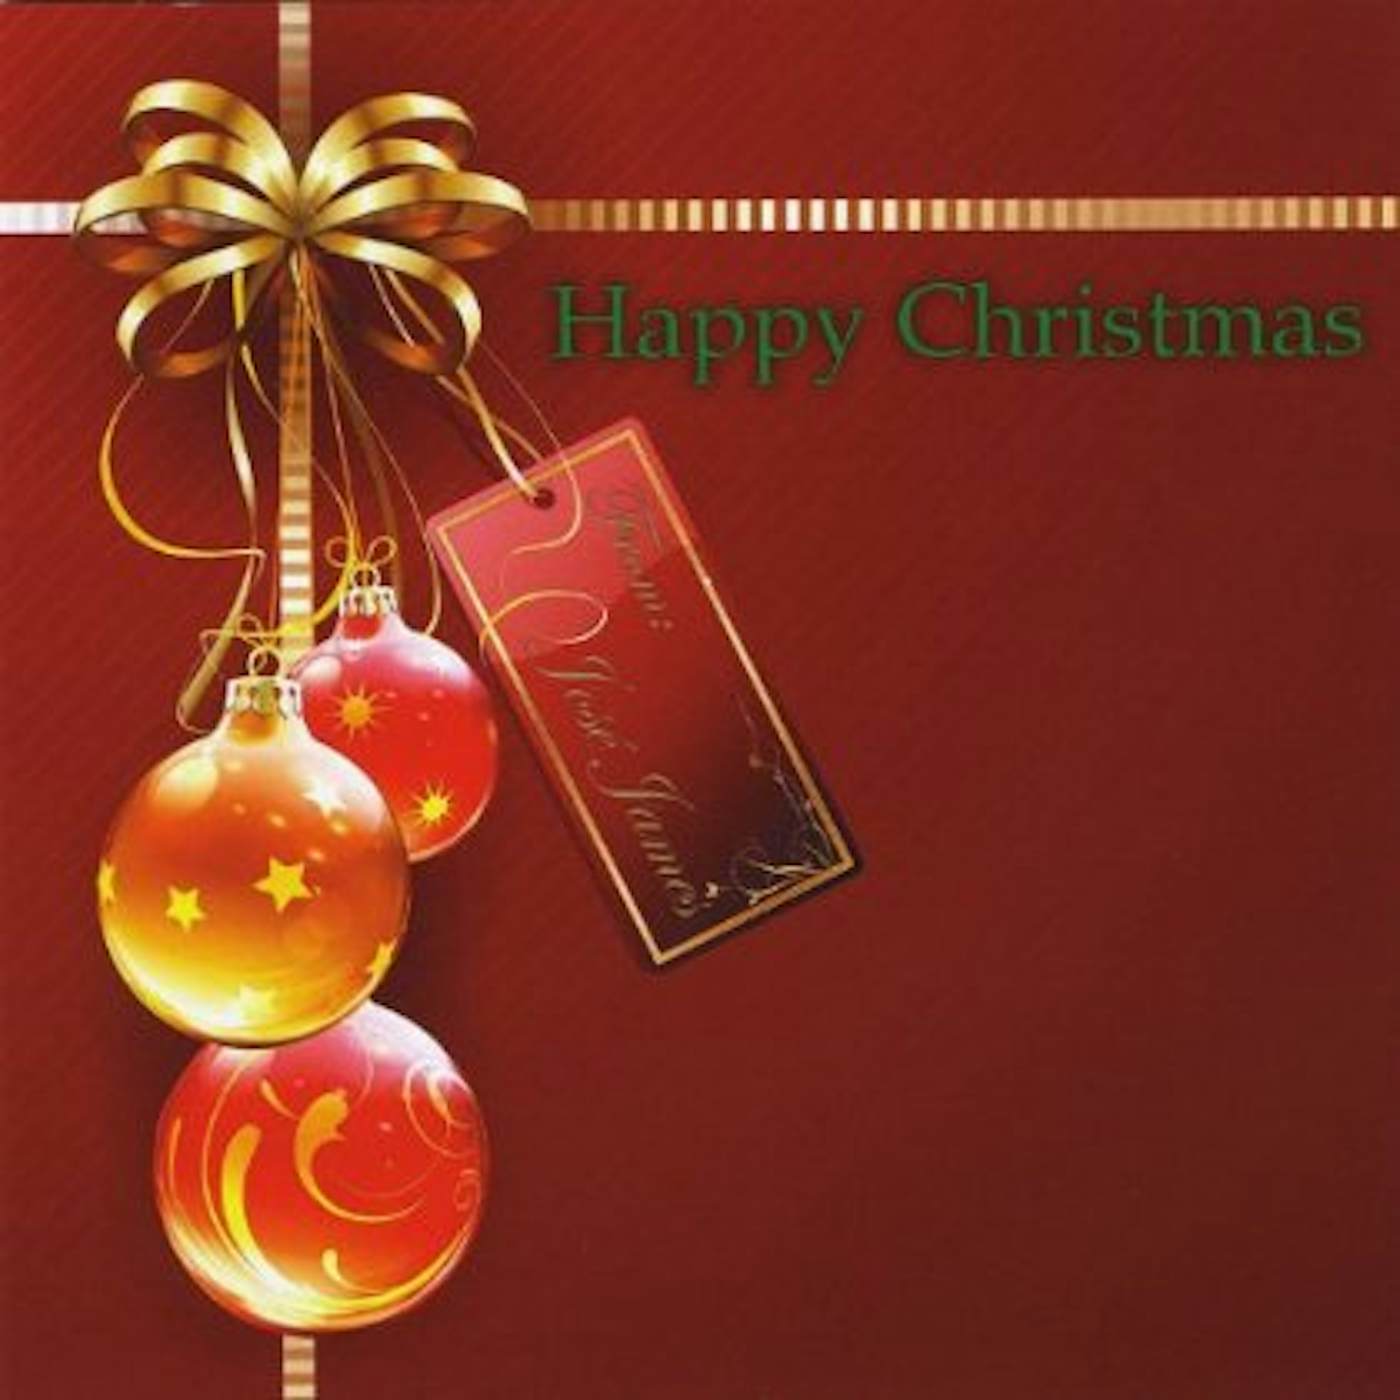 Jose James HAPPY CHRISTMAS CD